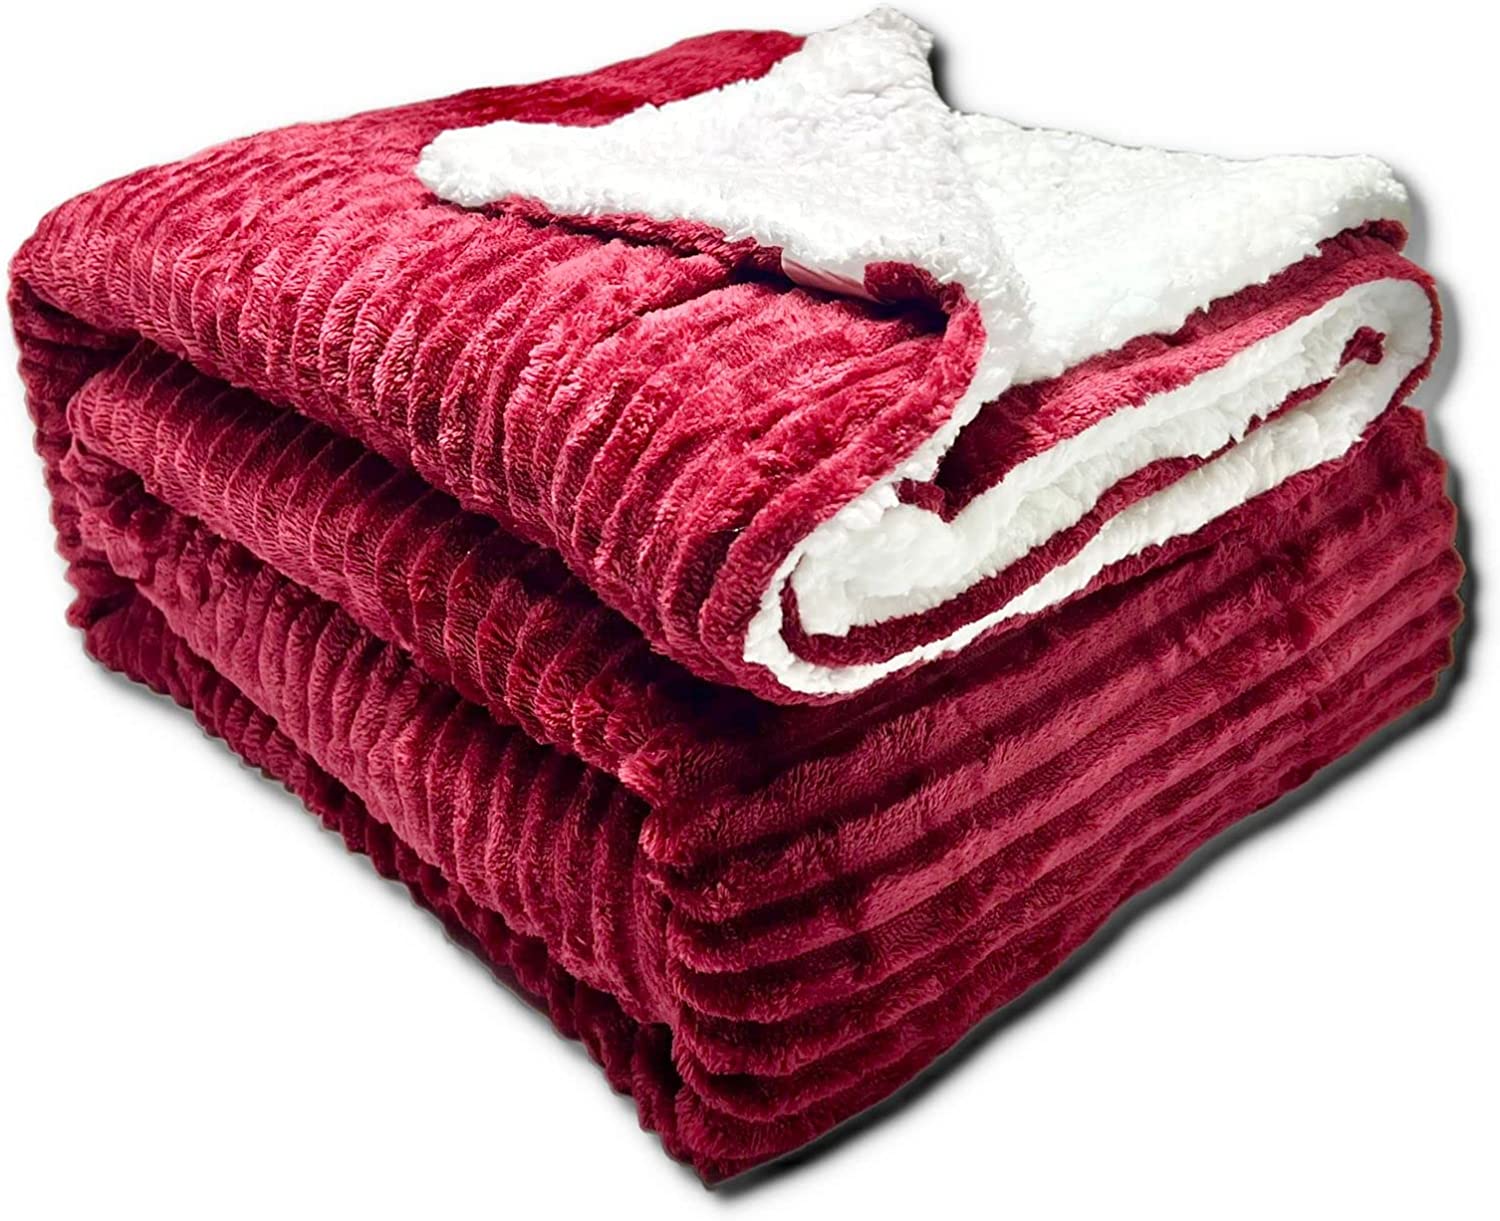 FABRIK Collection Sherpa Bed Blanket King Size Twin Plush Throw Blanket Fleece Reversible Flannel Blanket - Warm and Plush Travel Blanket for Bed Sofa Travel, Red